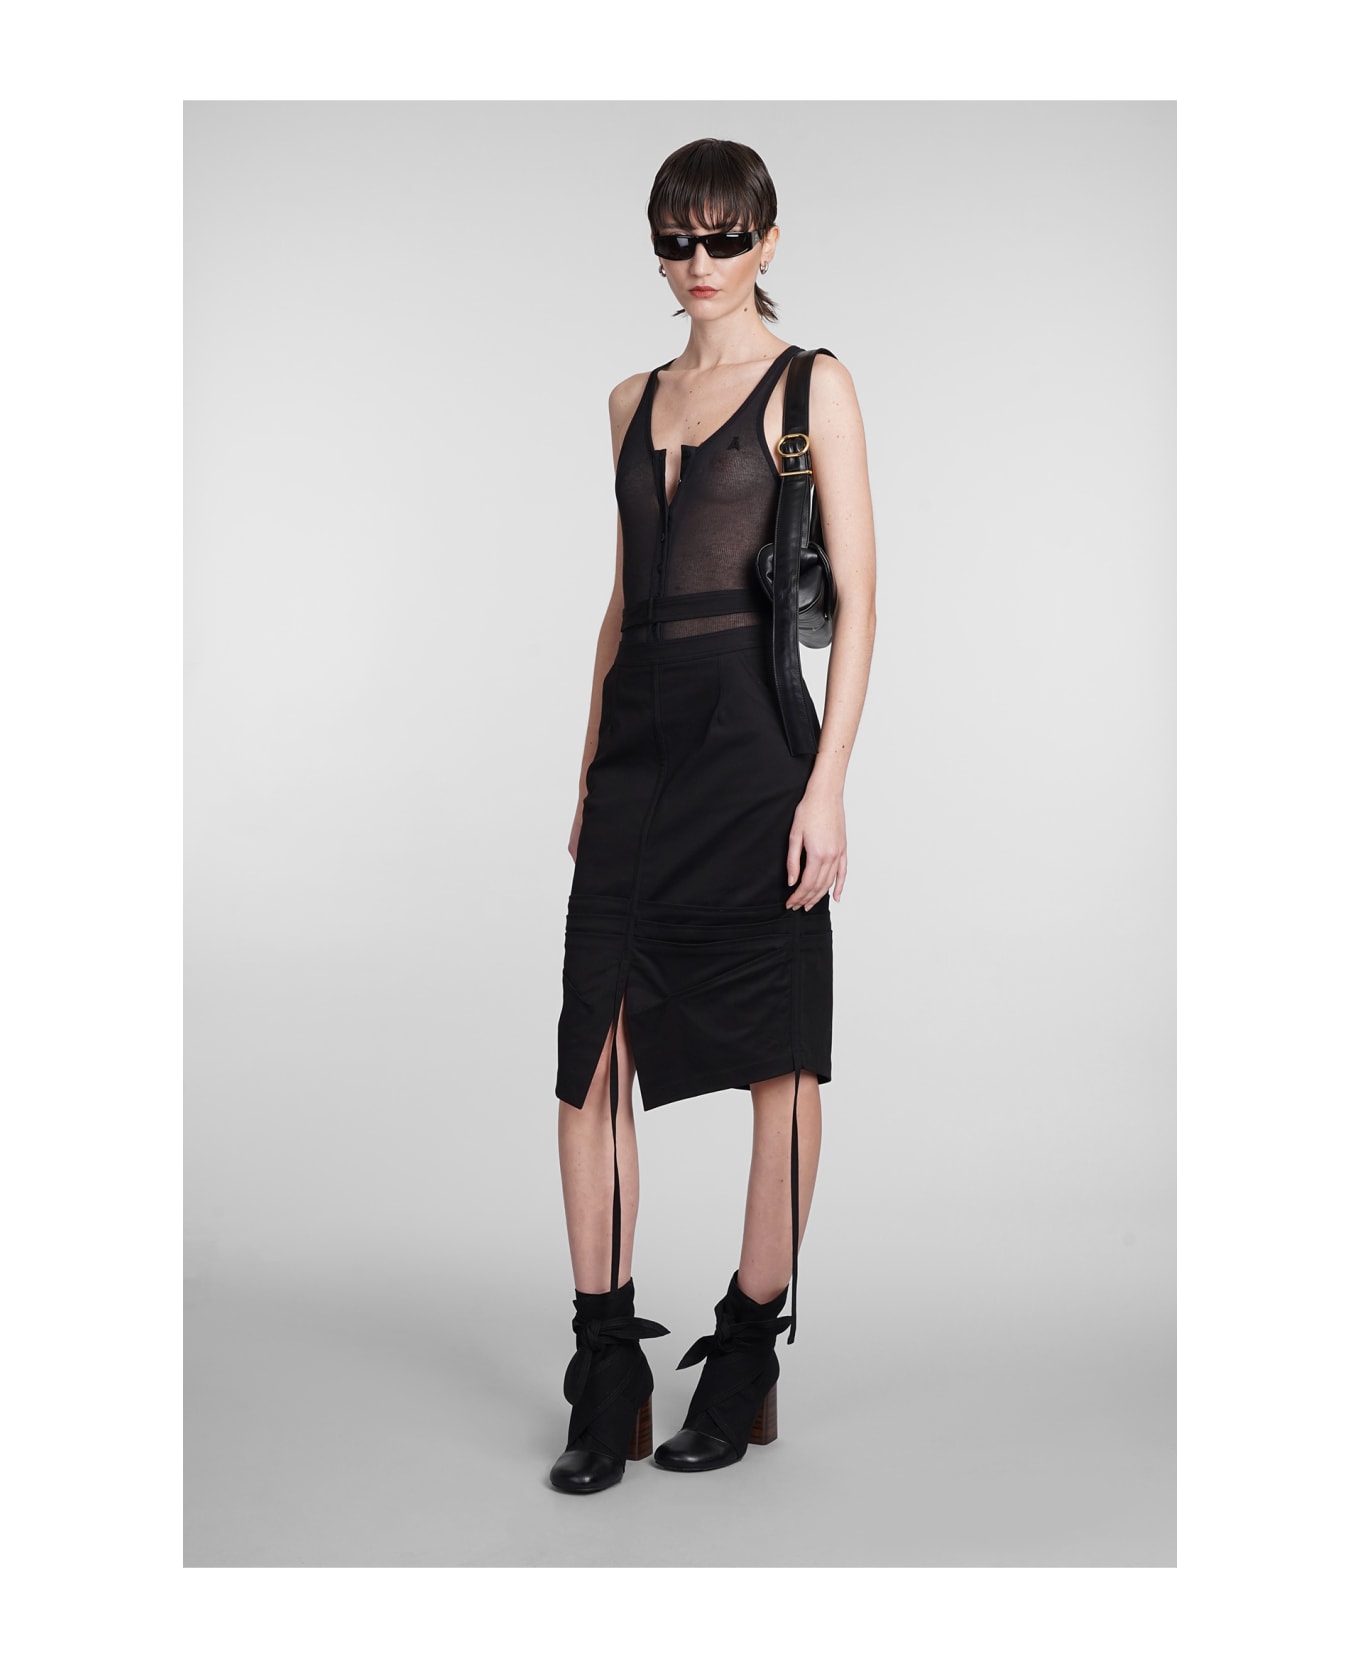 ANDREĀDAMO Skirt In Black Cotton - black